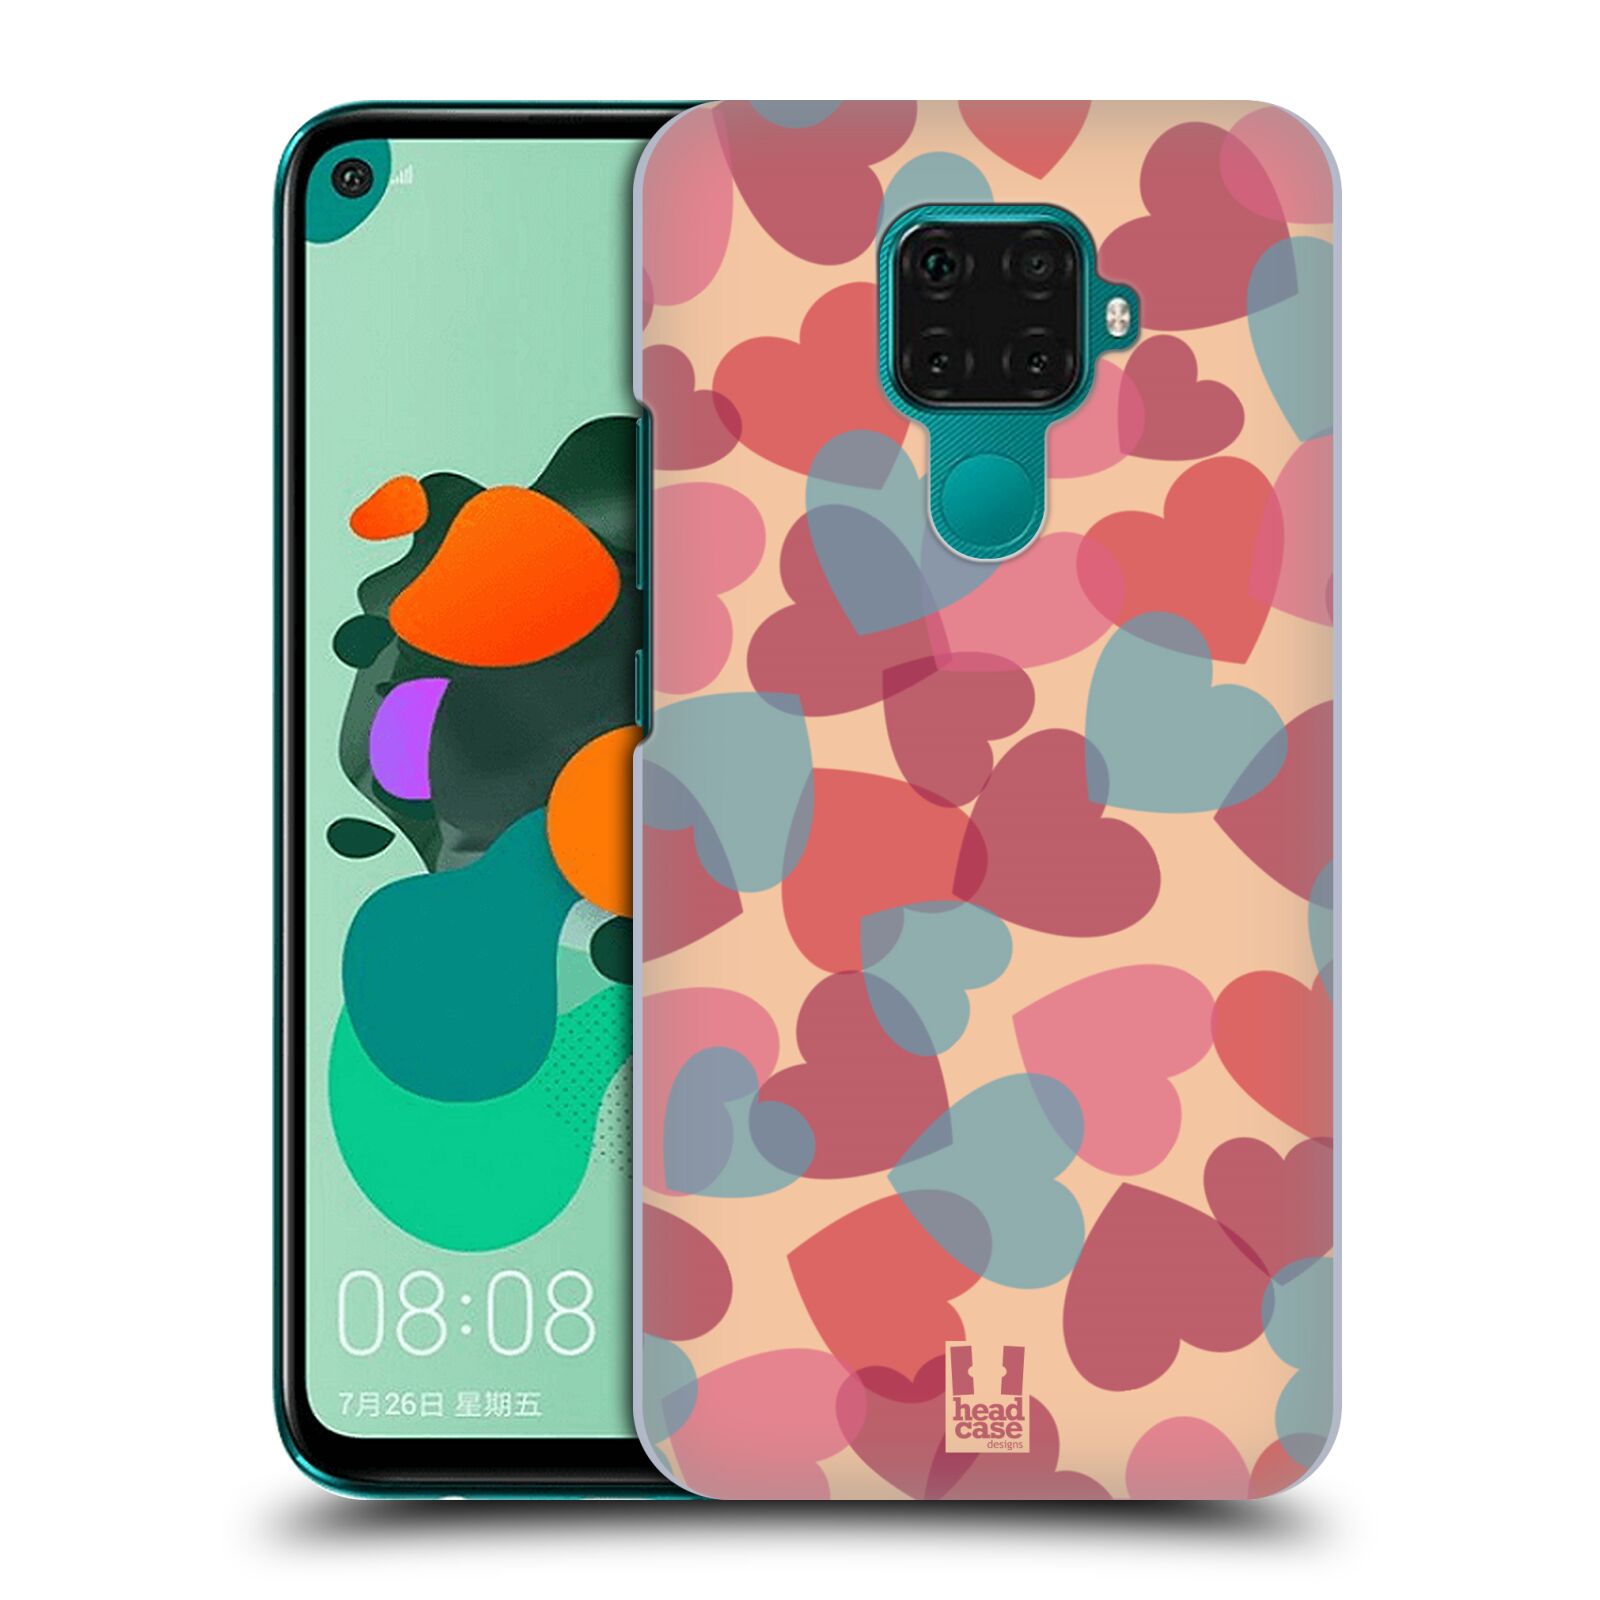 Zadní obal pro mobil Huawei Mate 30 LITE - HEAD CASE - Růžová srdíčka kreslený vzor